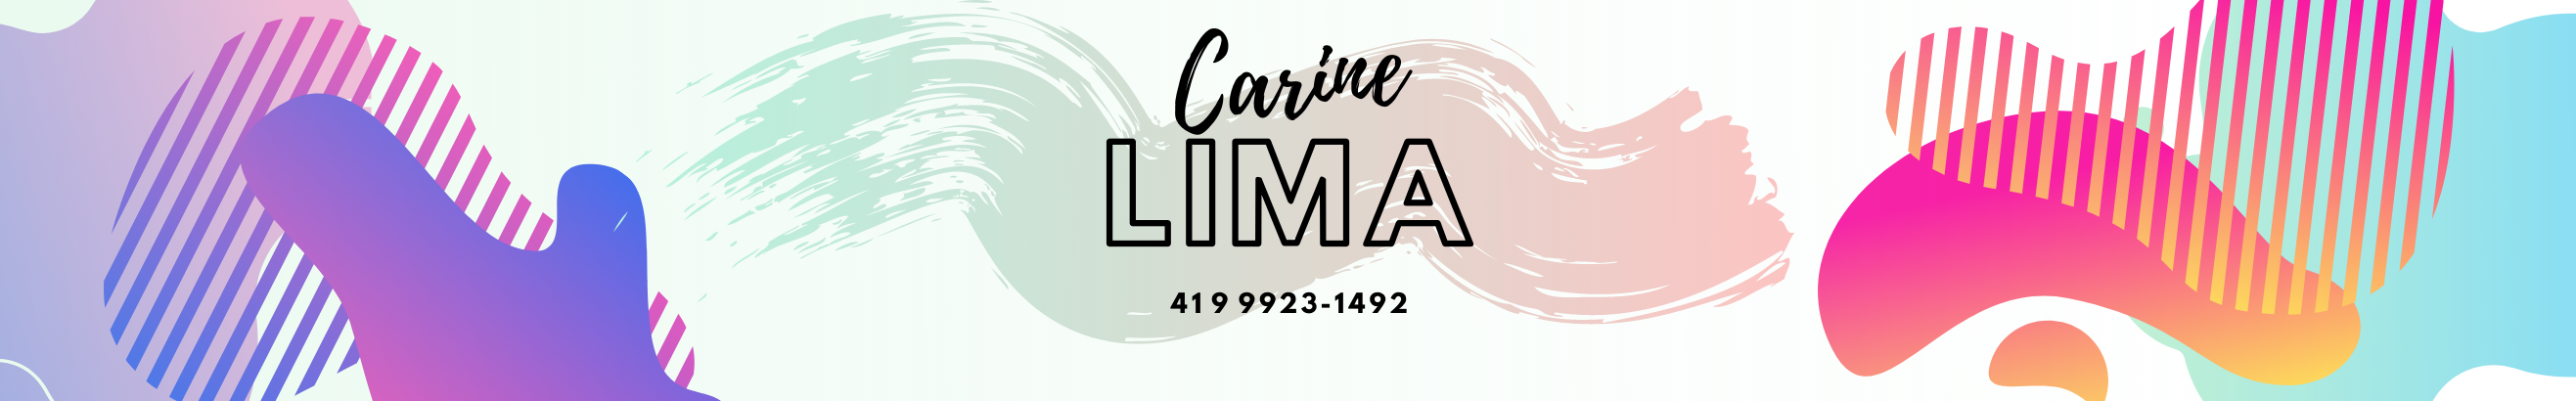 Banner de perfil de Carine Lima